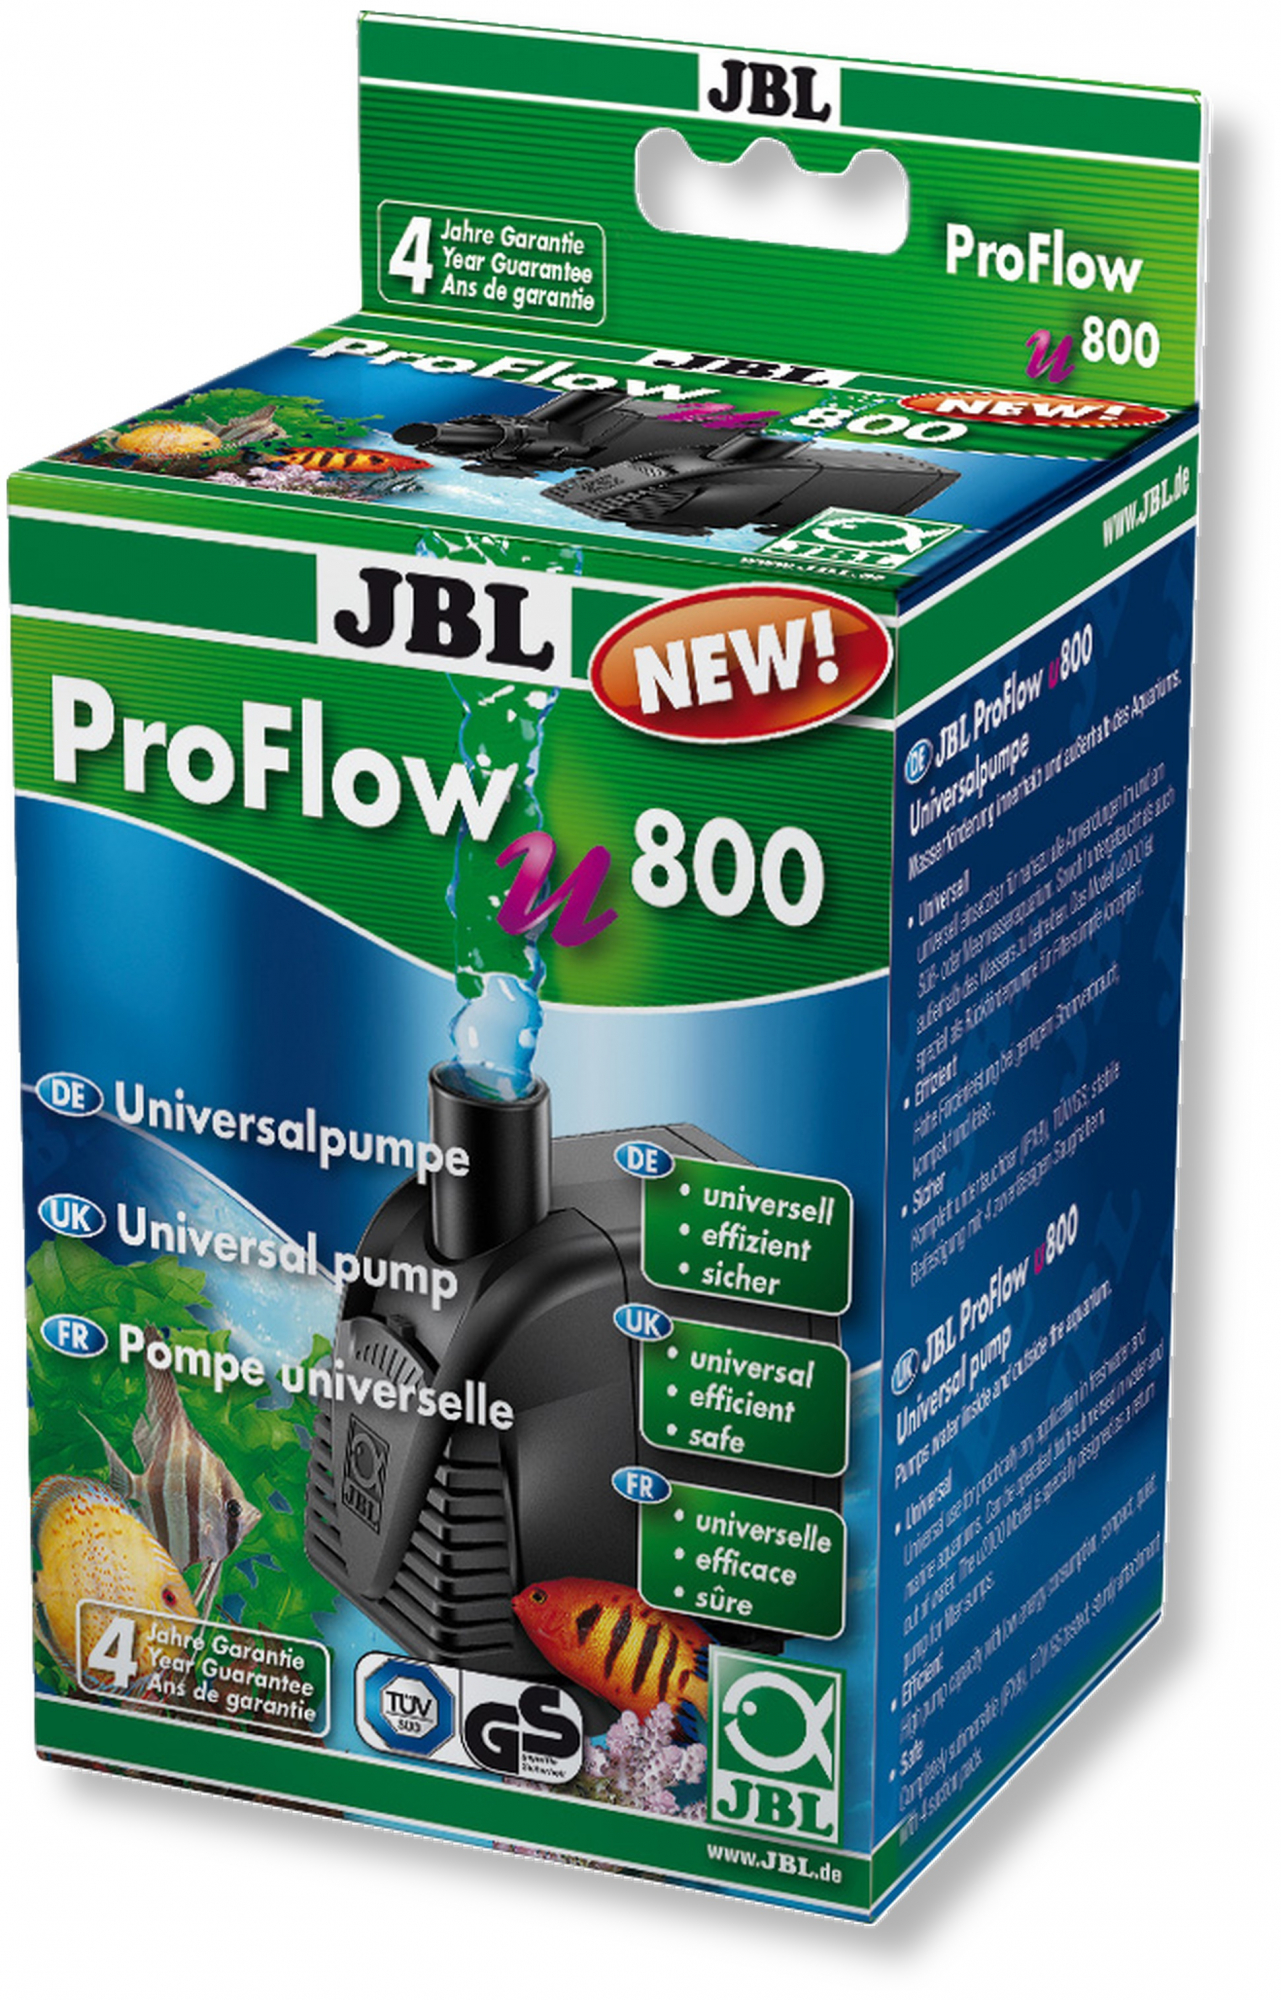 JBL Proflow Bomba universal - varios modelos disponibles